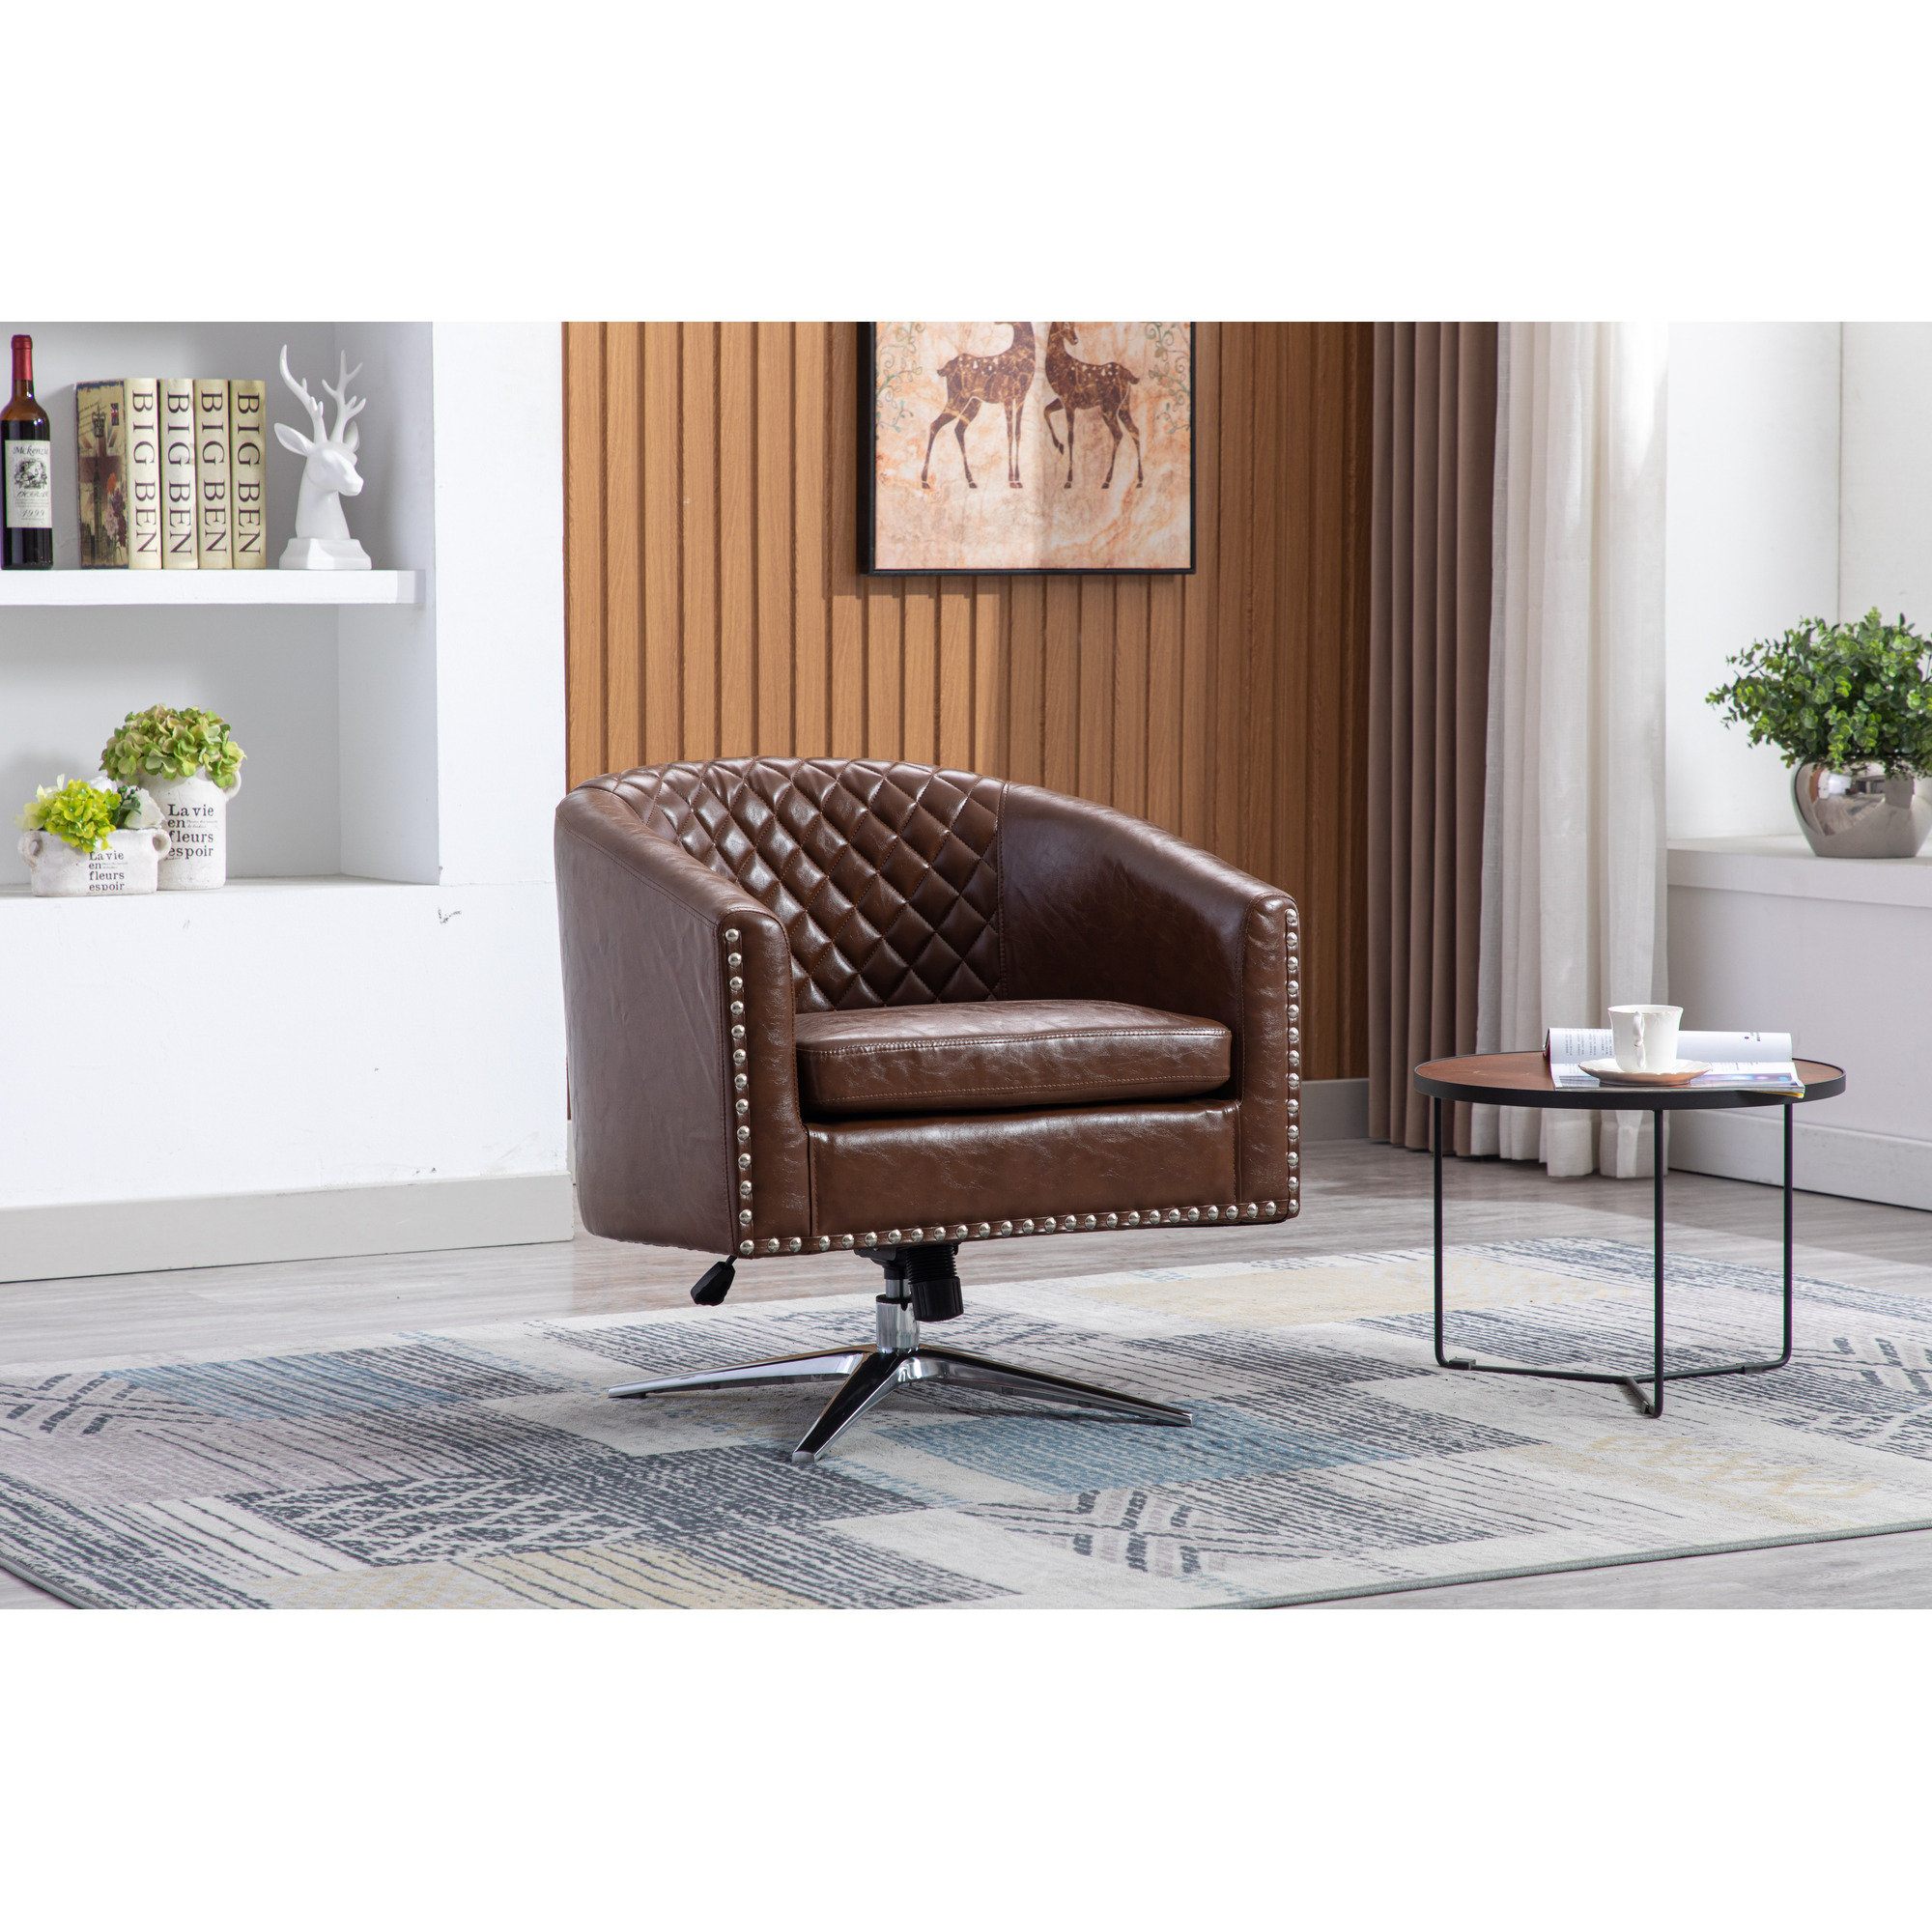 25INCH UltraWide Padded Big Armless Swivel Home Office Desk Chair